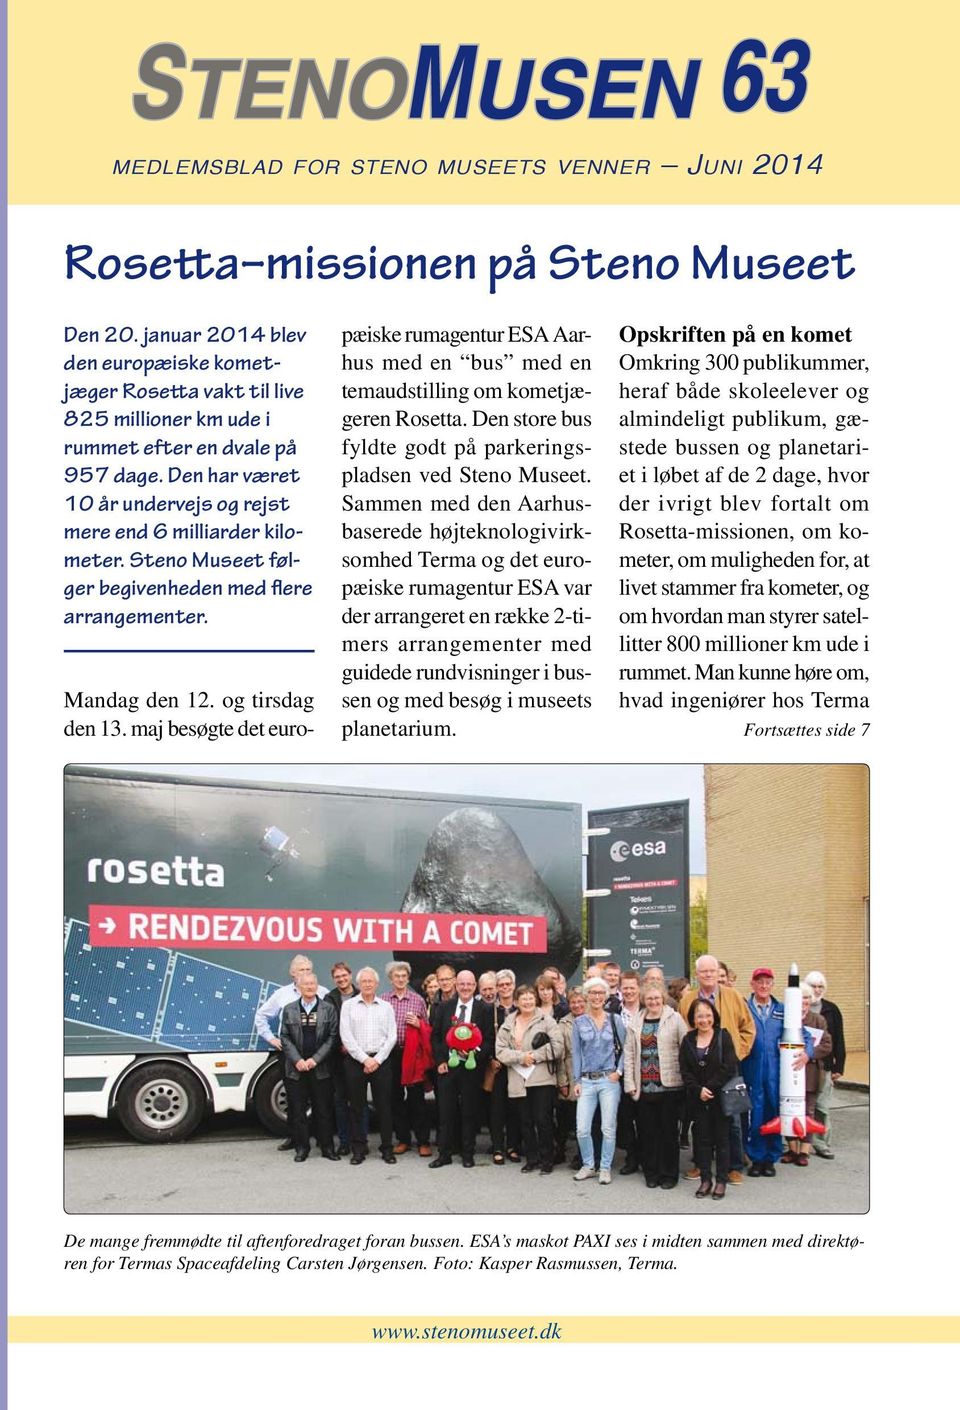 Steno Museet følger begivenheden med flere arrangementer. Mandag den 12. og tirsdag den 13. maj besøgte det europæiske rumagentur ESA Aarhus med en bus med en temaudstilling om kometjægeren Rosetta.